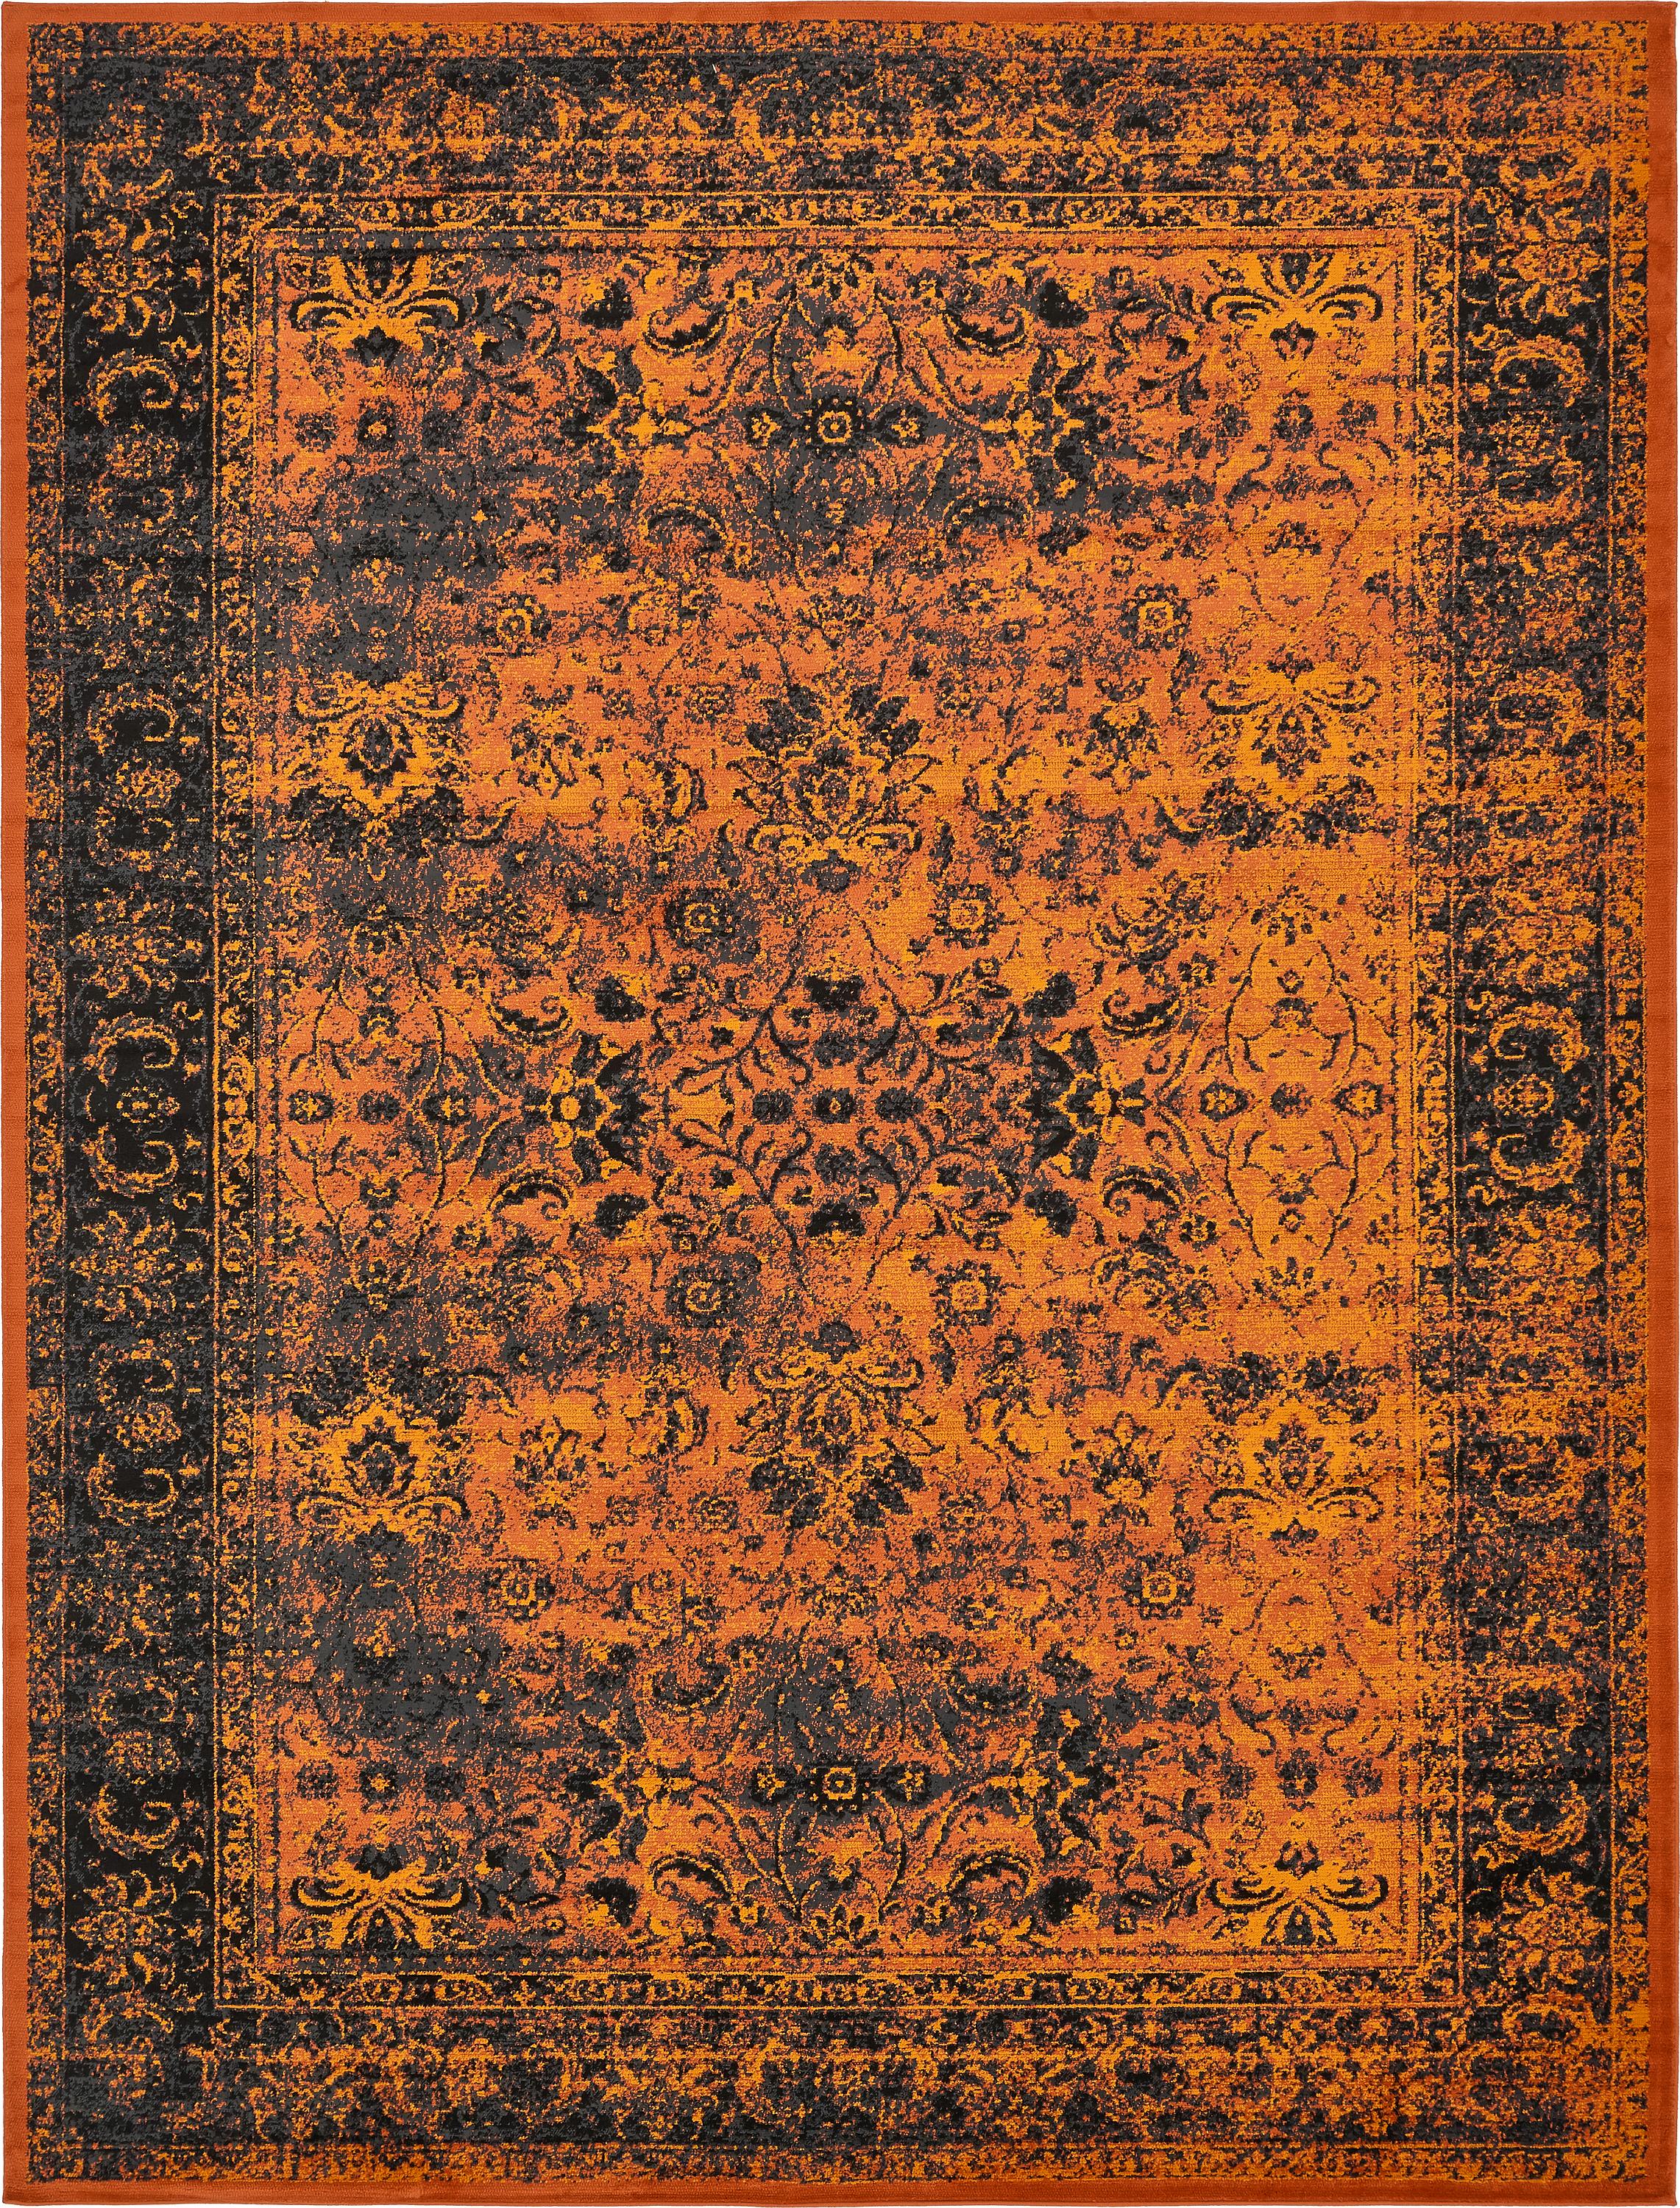 Unique Loom Oriental Transitional Area Rugs, Orange - image 1 of 8